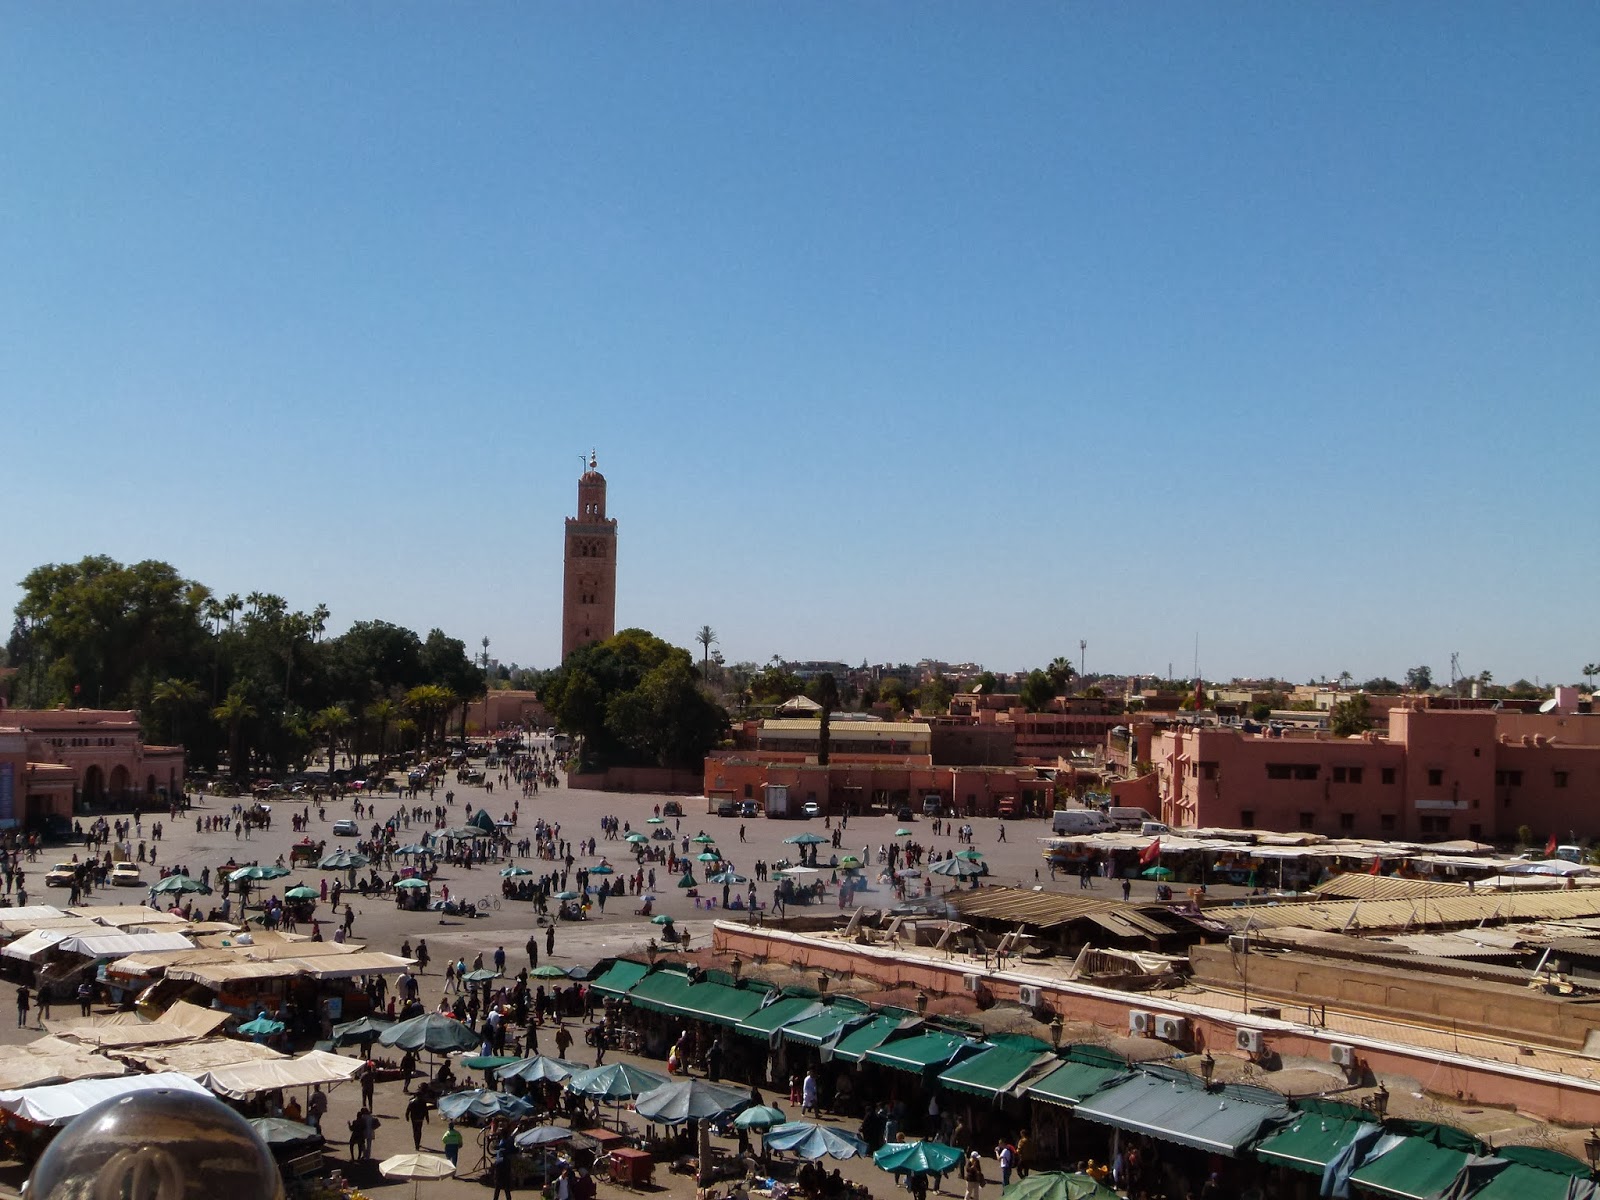 I love Morocco